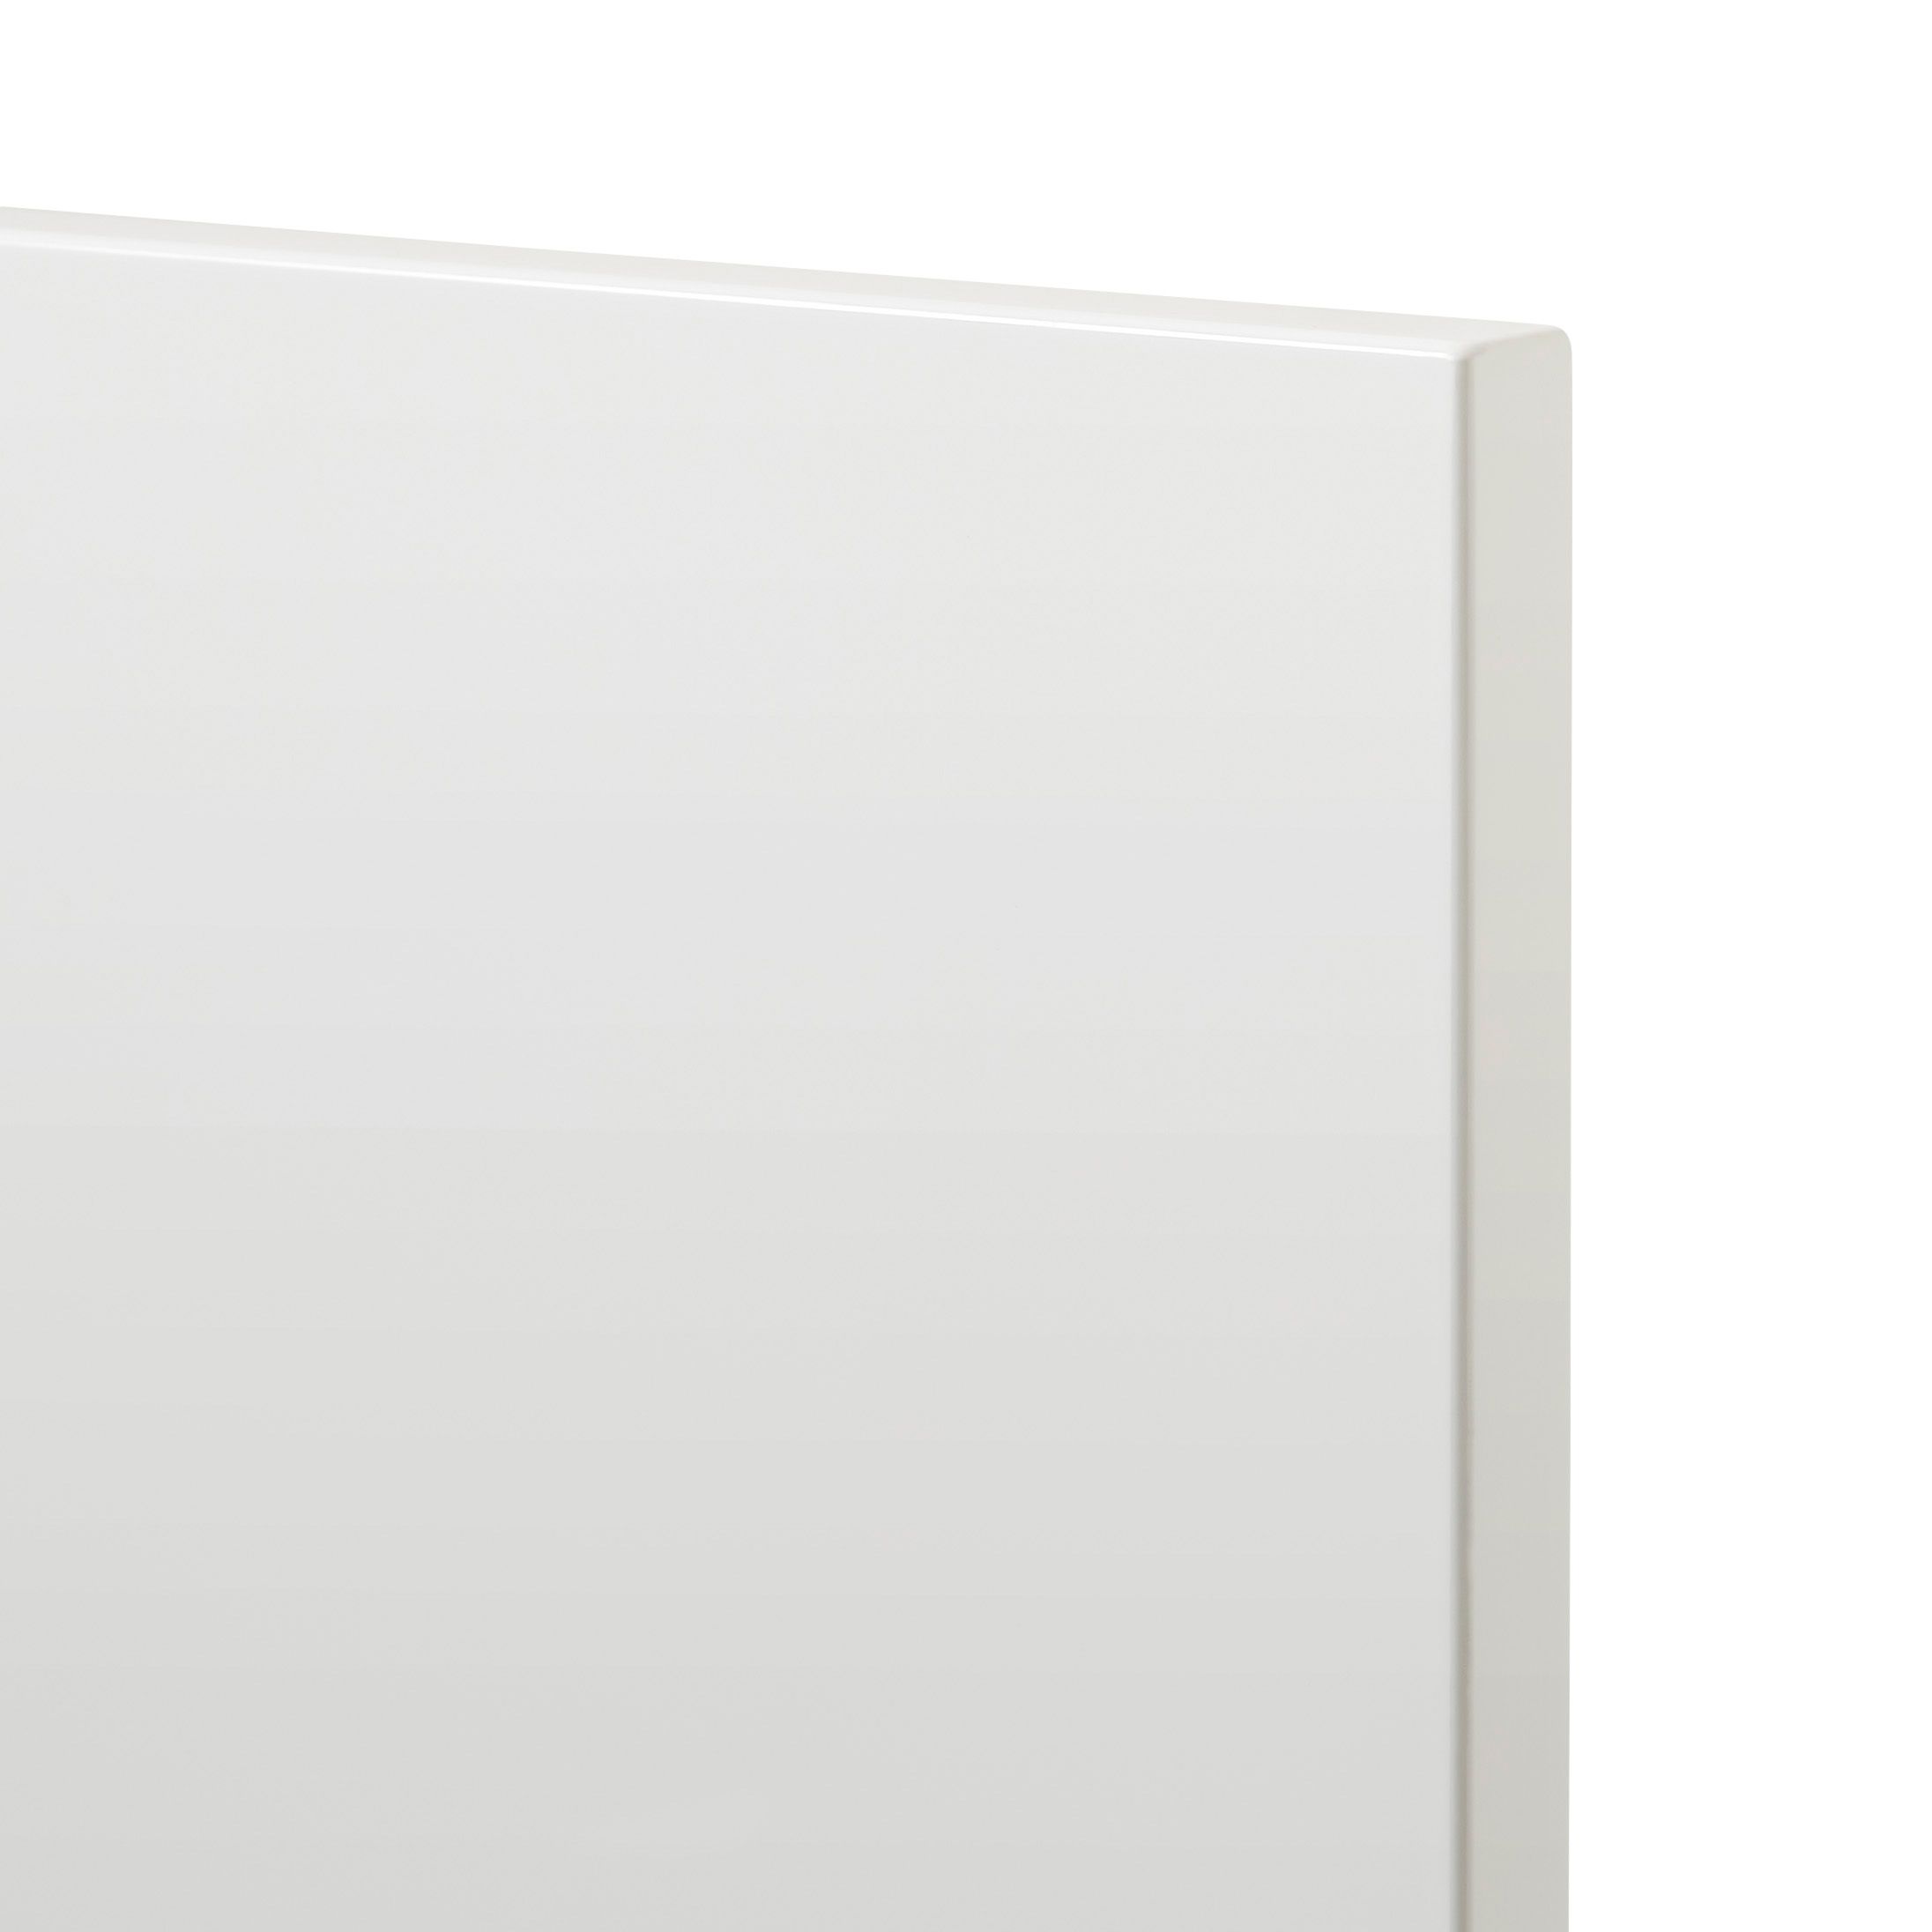 GoodHome Alisma High gloss white slab Larder/Fridge Cabinet door (W)500mm (H)1287mm (T)18mm